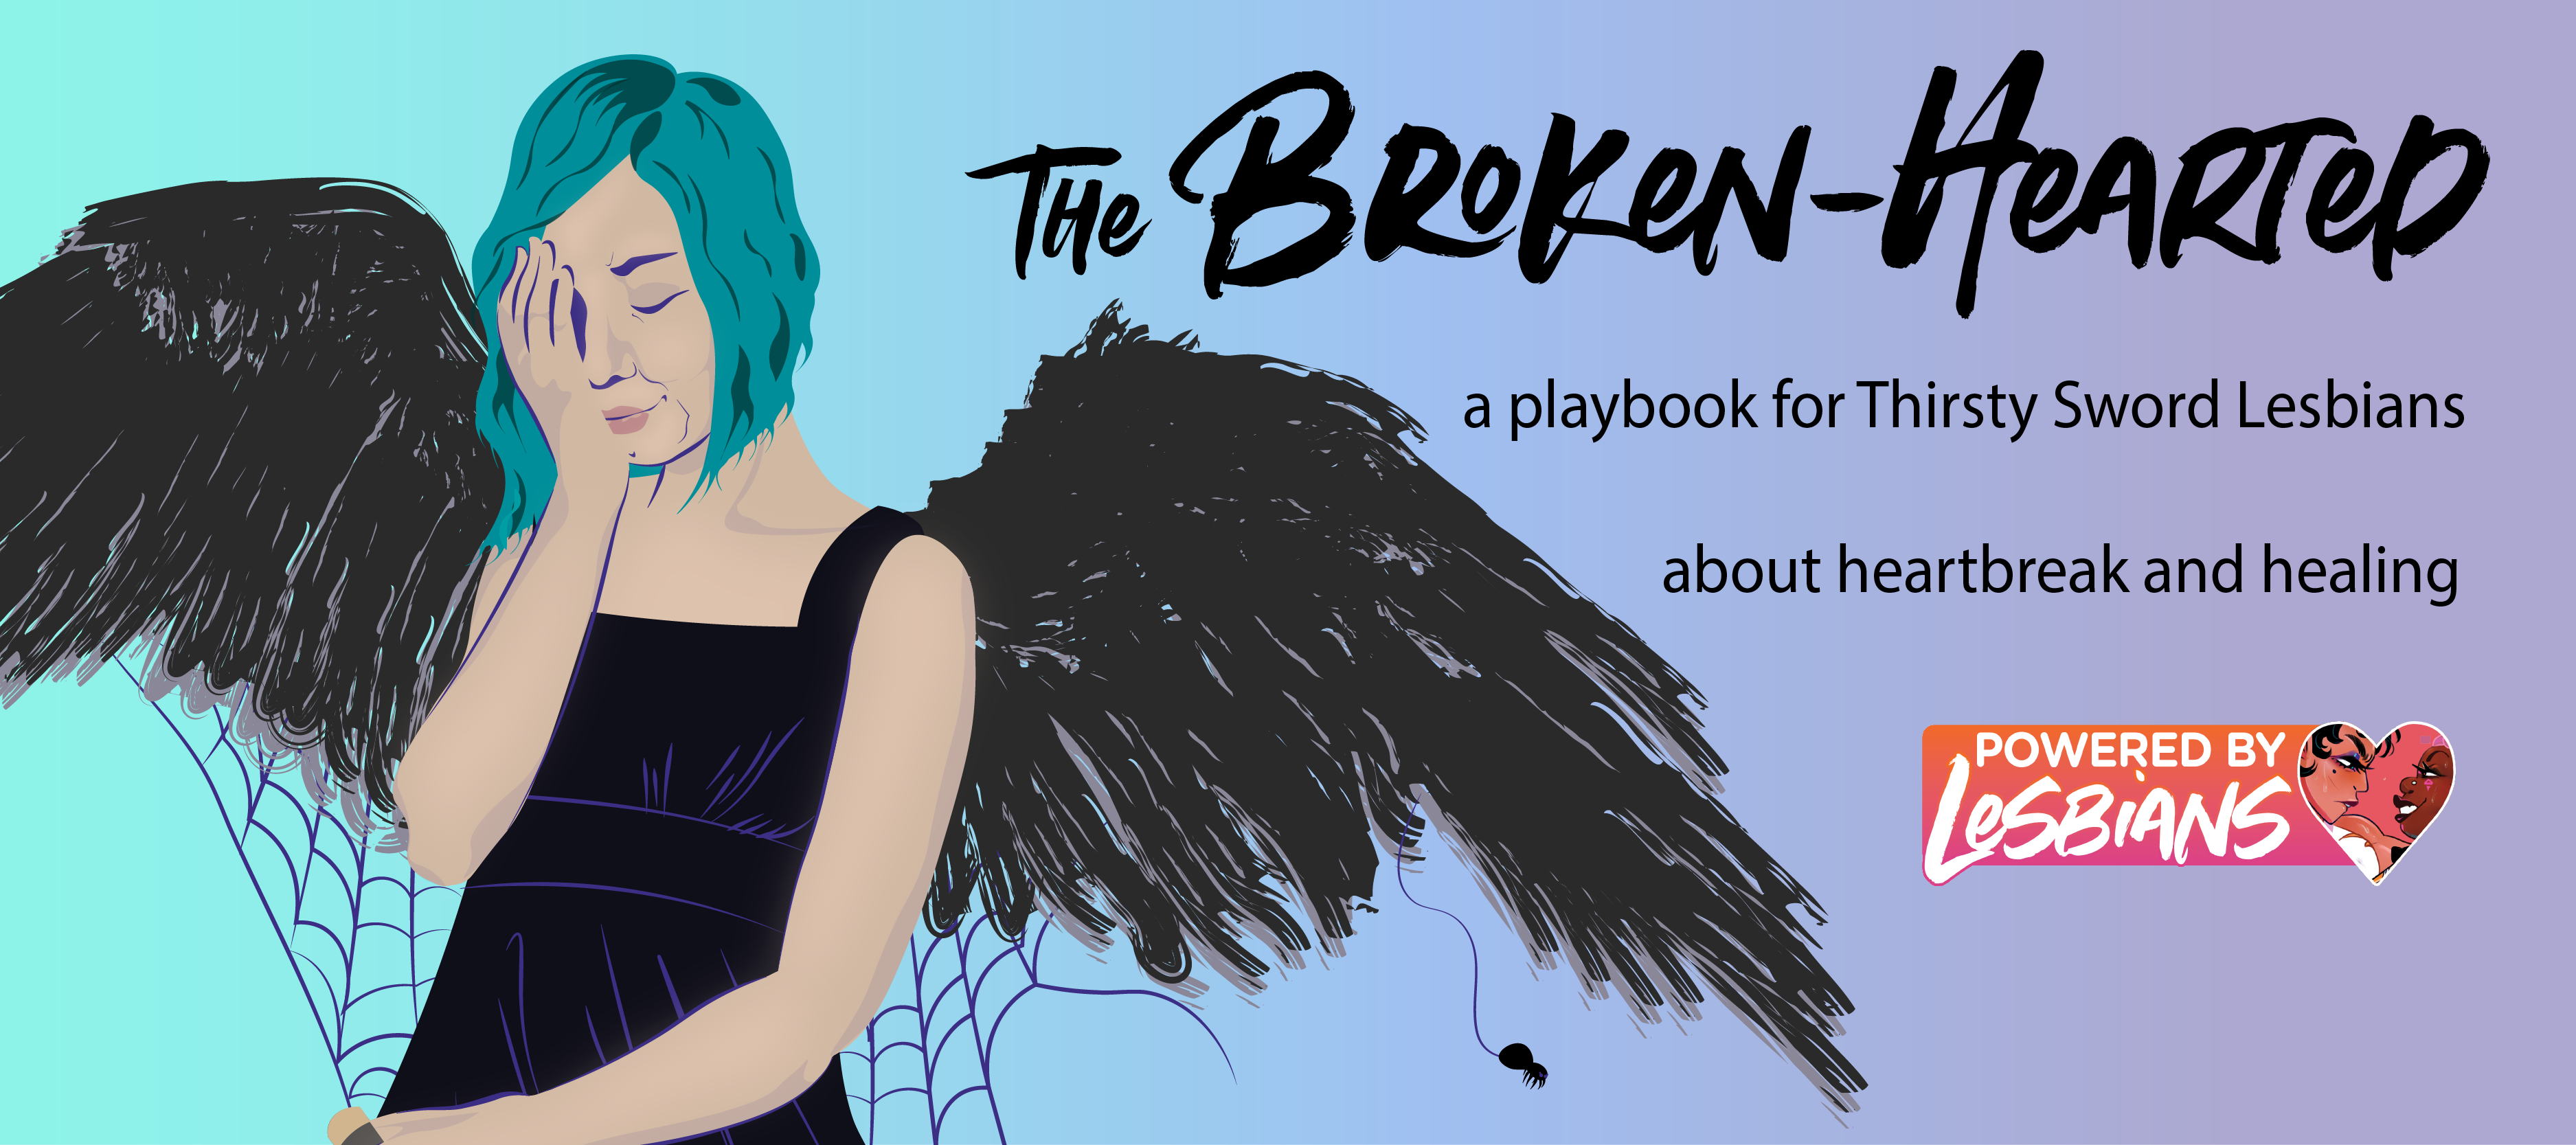 The Broken-Hearted playbook